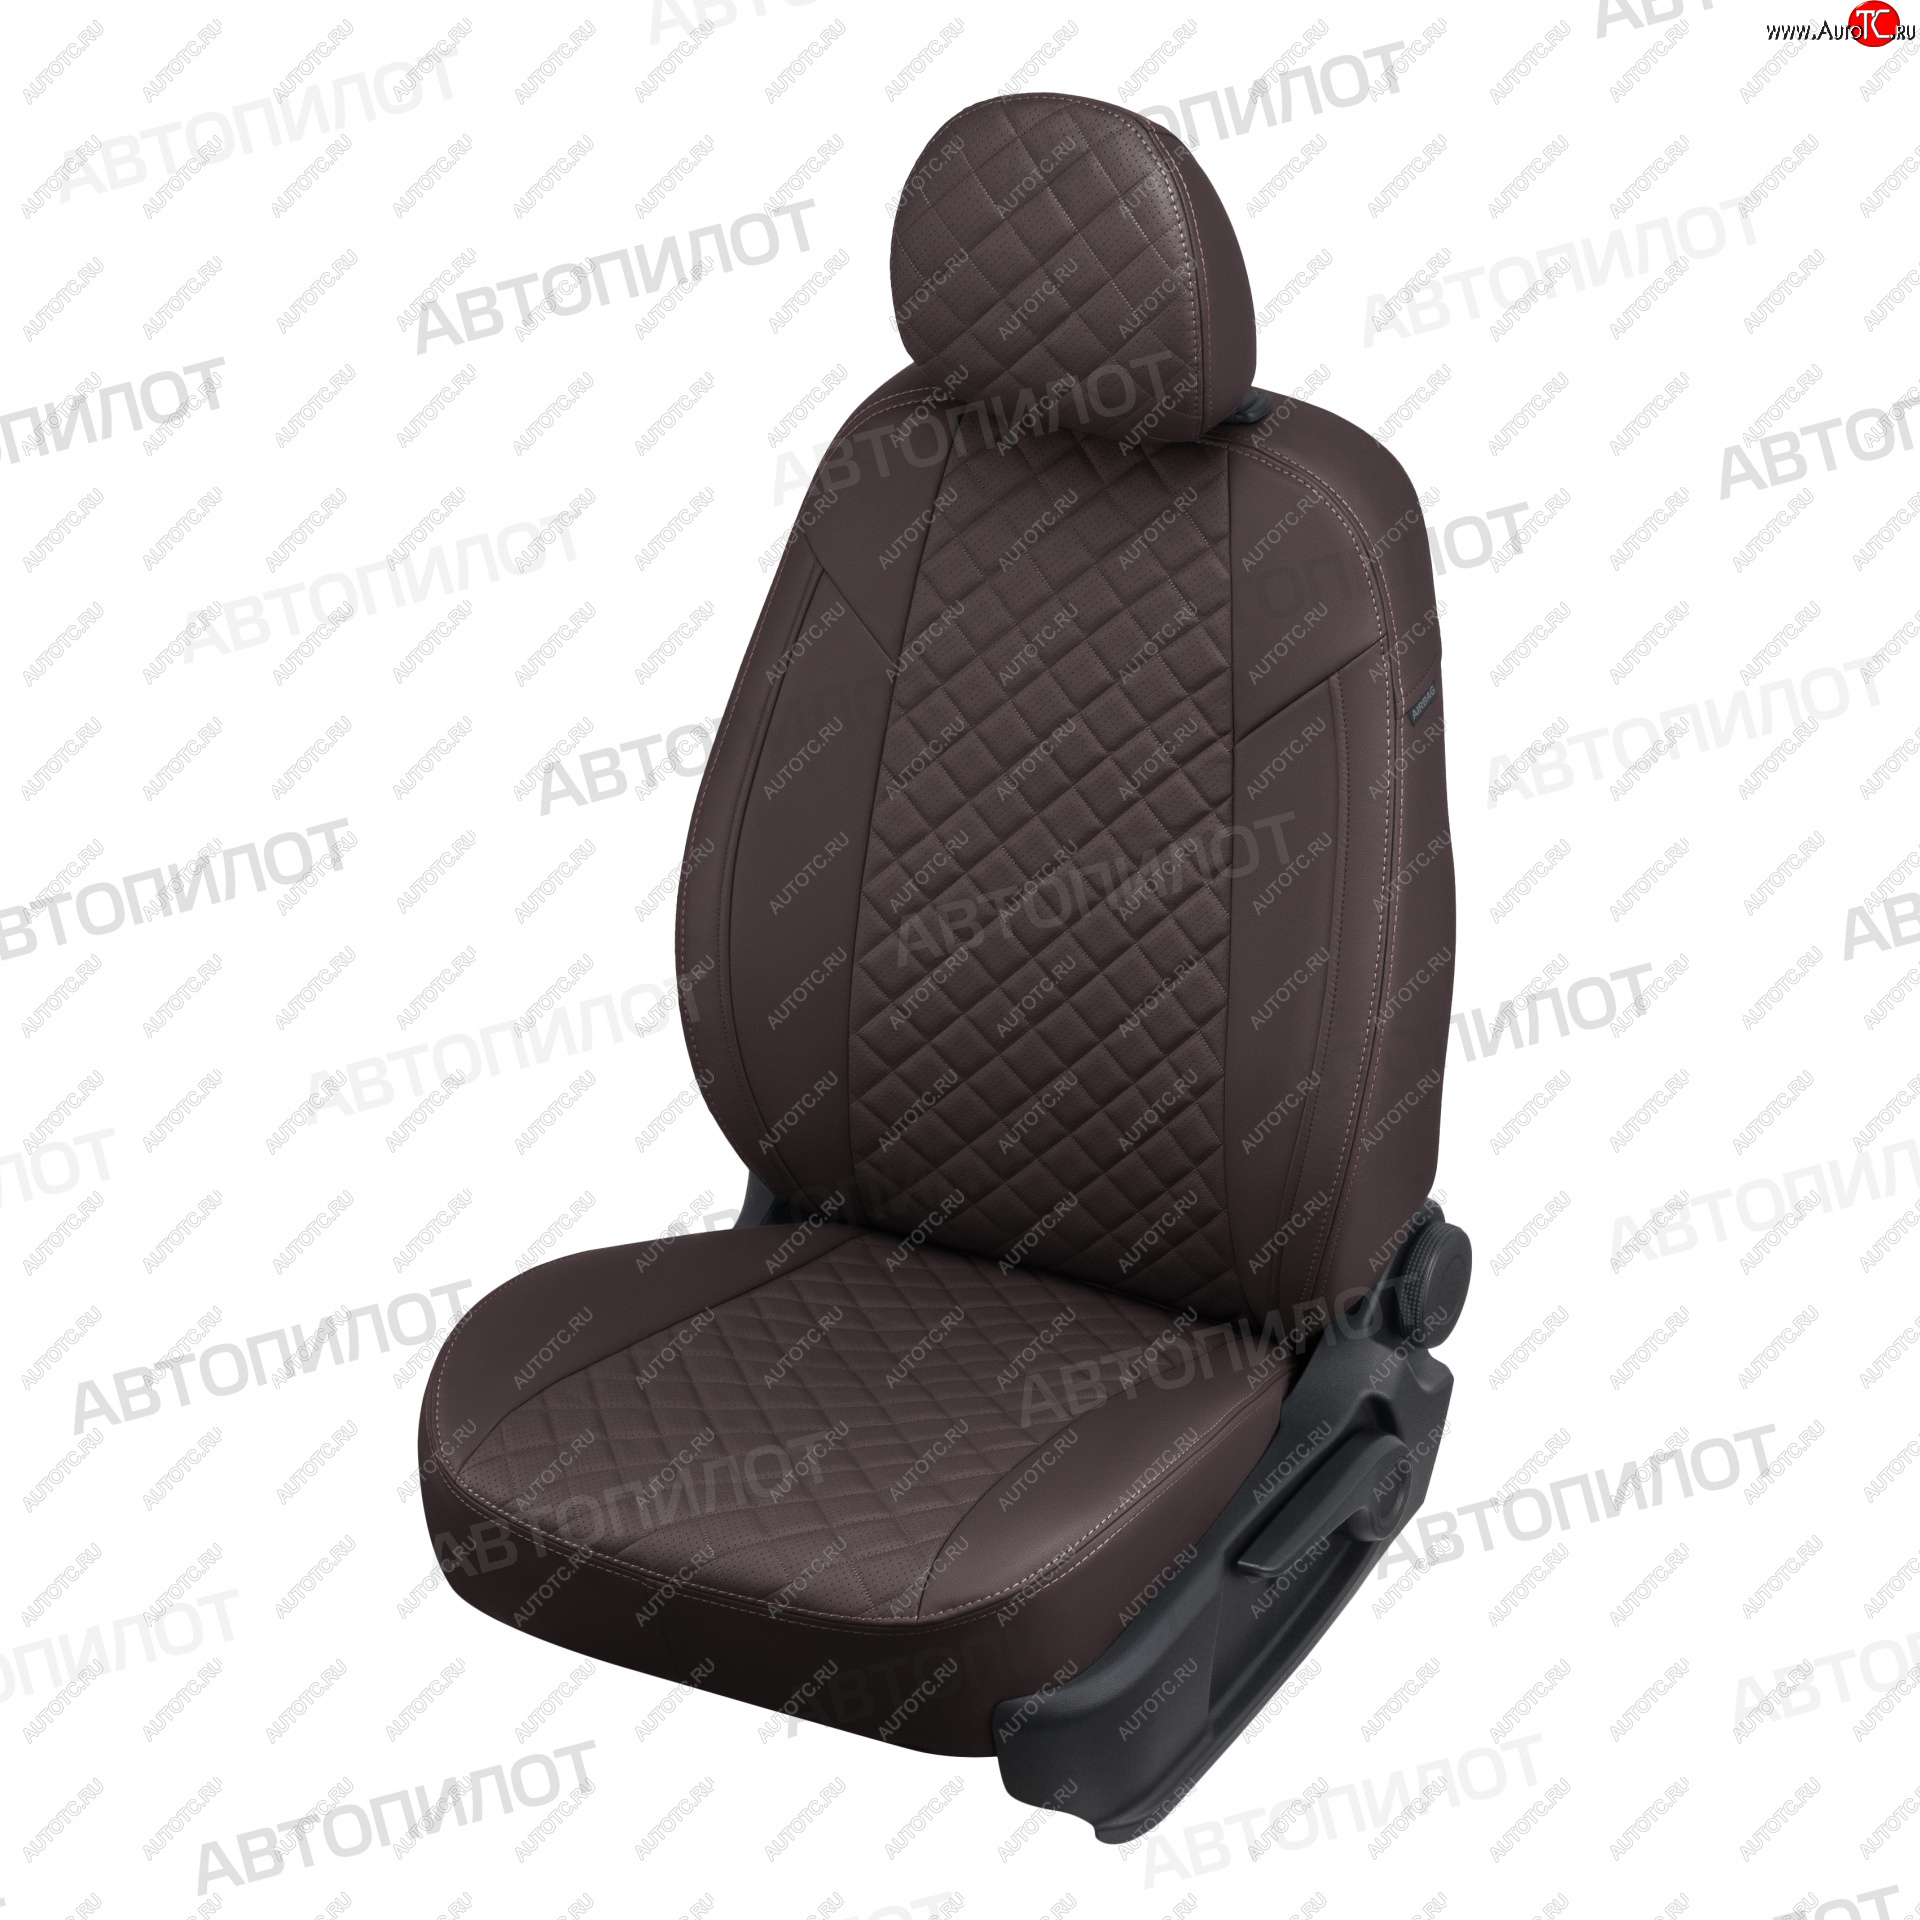 13 999 р. Чехлы сидений (экокожа) Автопилот Ромб  Hyundai Sonata  EF (2001-2013), KIA Magentis (2000-2005) (шоколад)